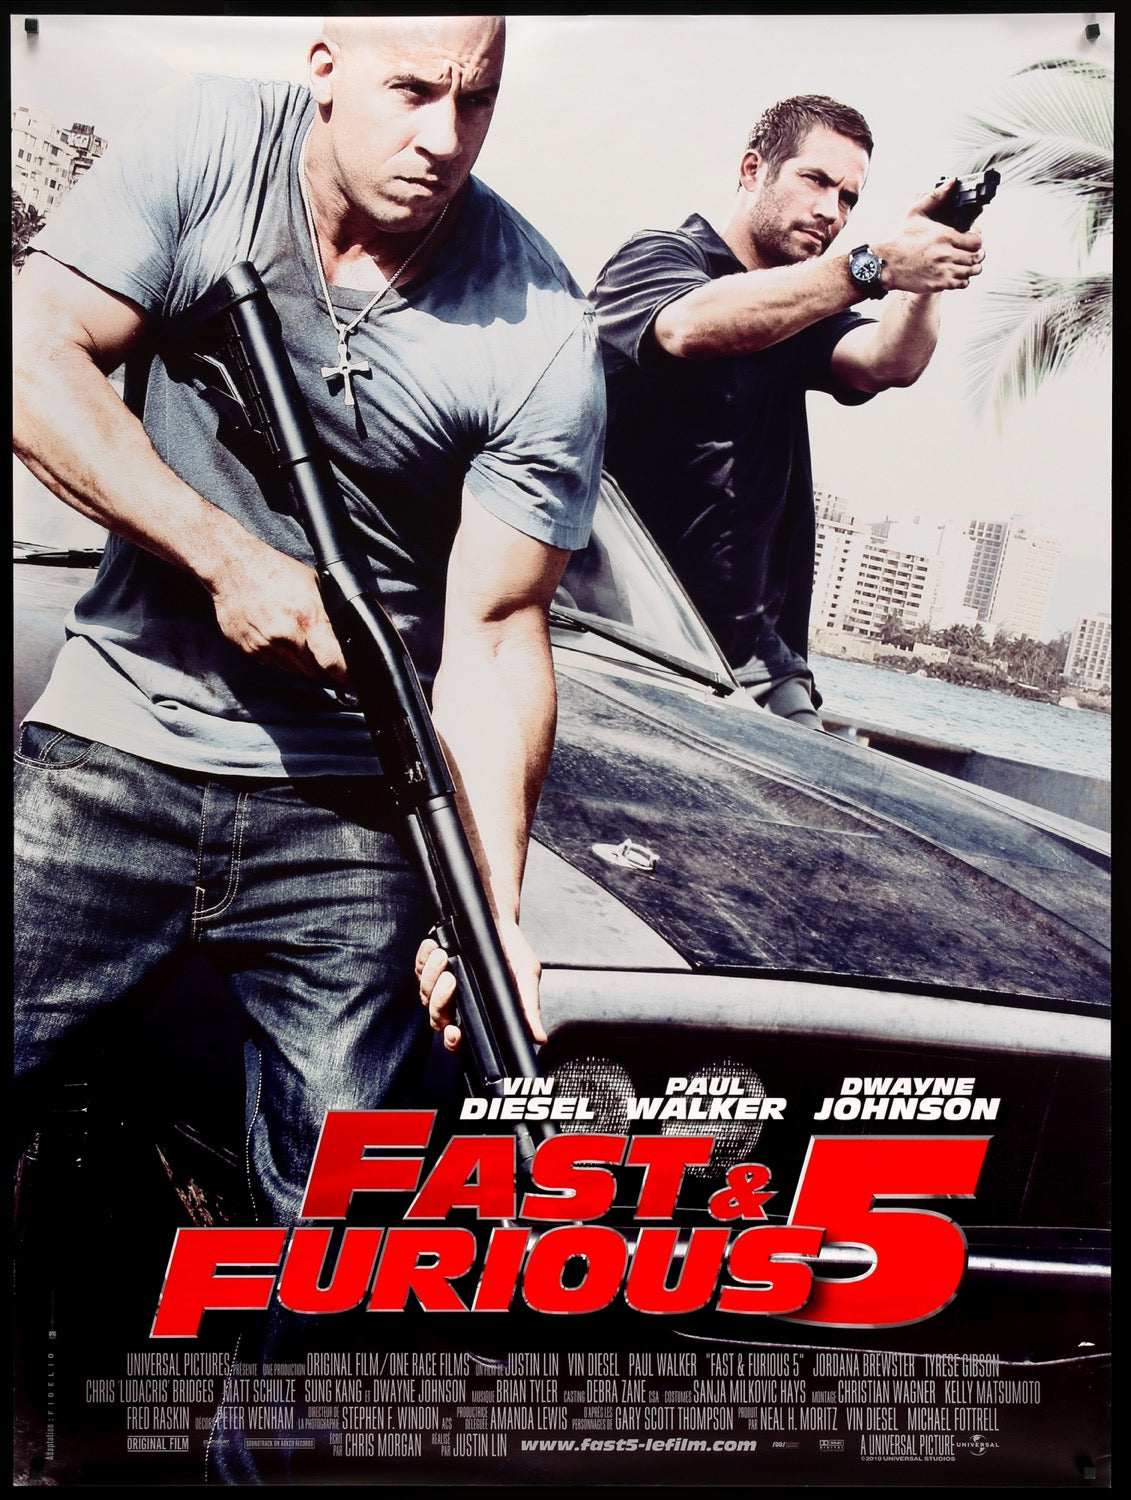 Fast Five (2011) original movie poster for sale at Original Film Art